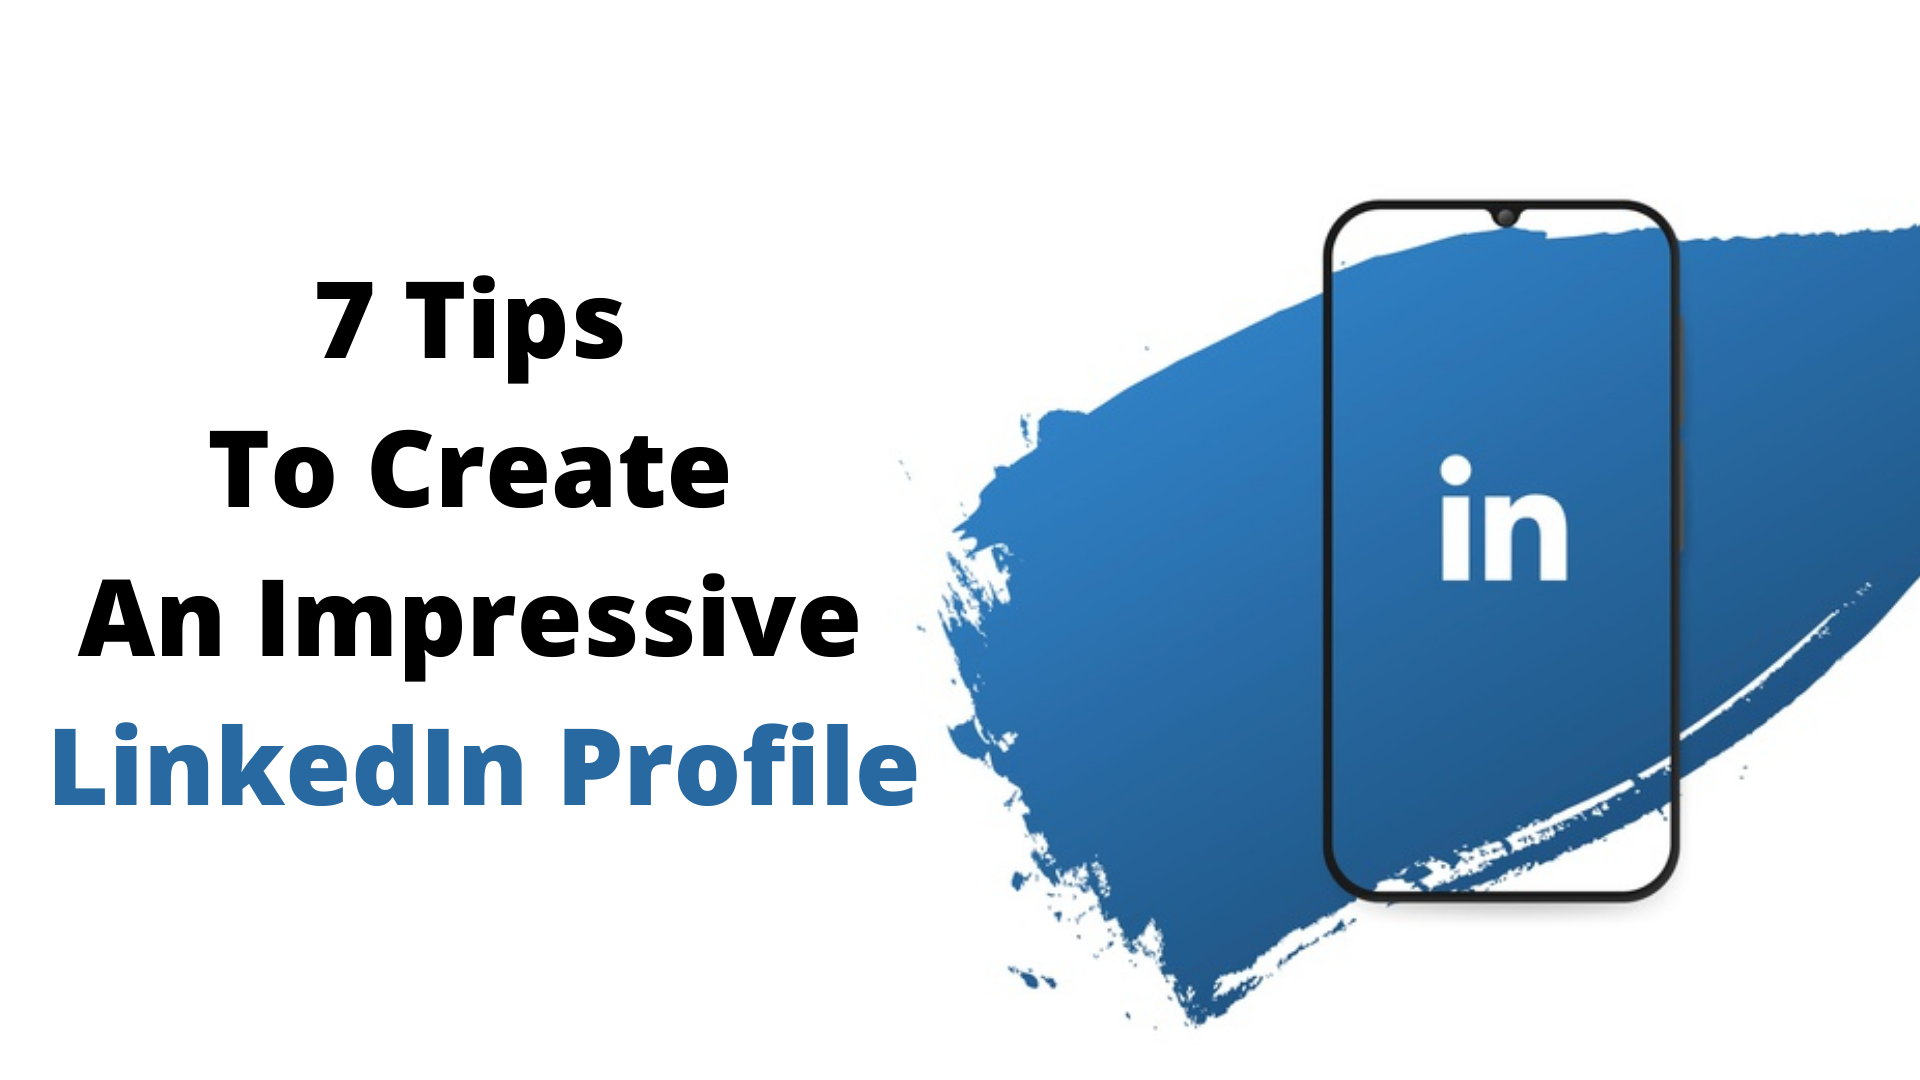 7 Tips To Create An Impressive LinkedIn Profile